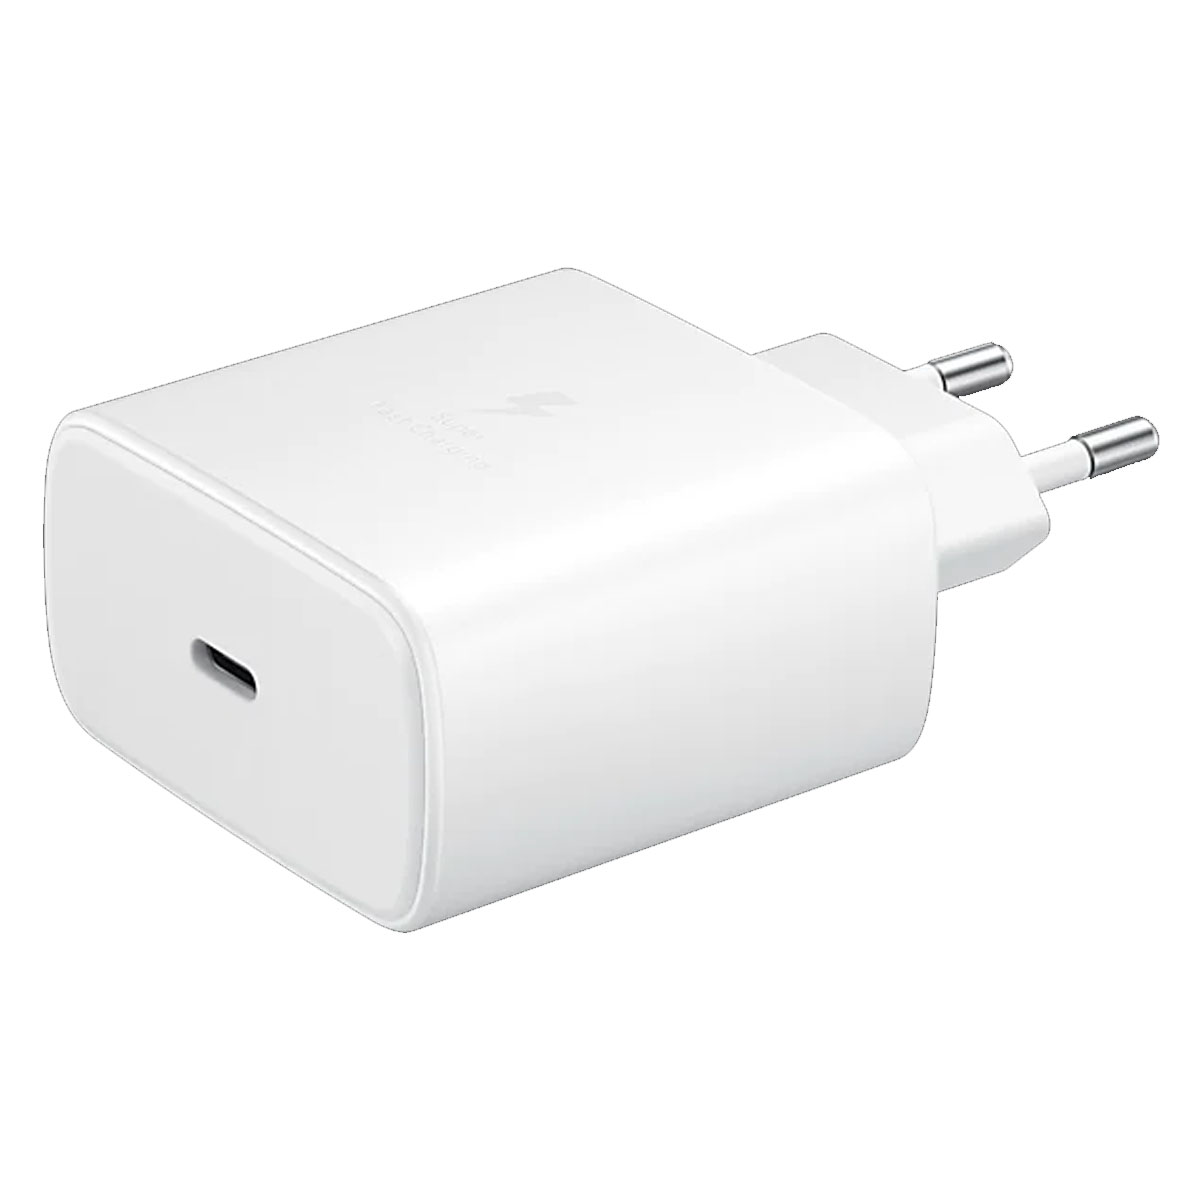 СЗУ (Сетевое зарядное устройство) EP-TA845, 45W, 1 USB Type C, цвет белый